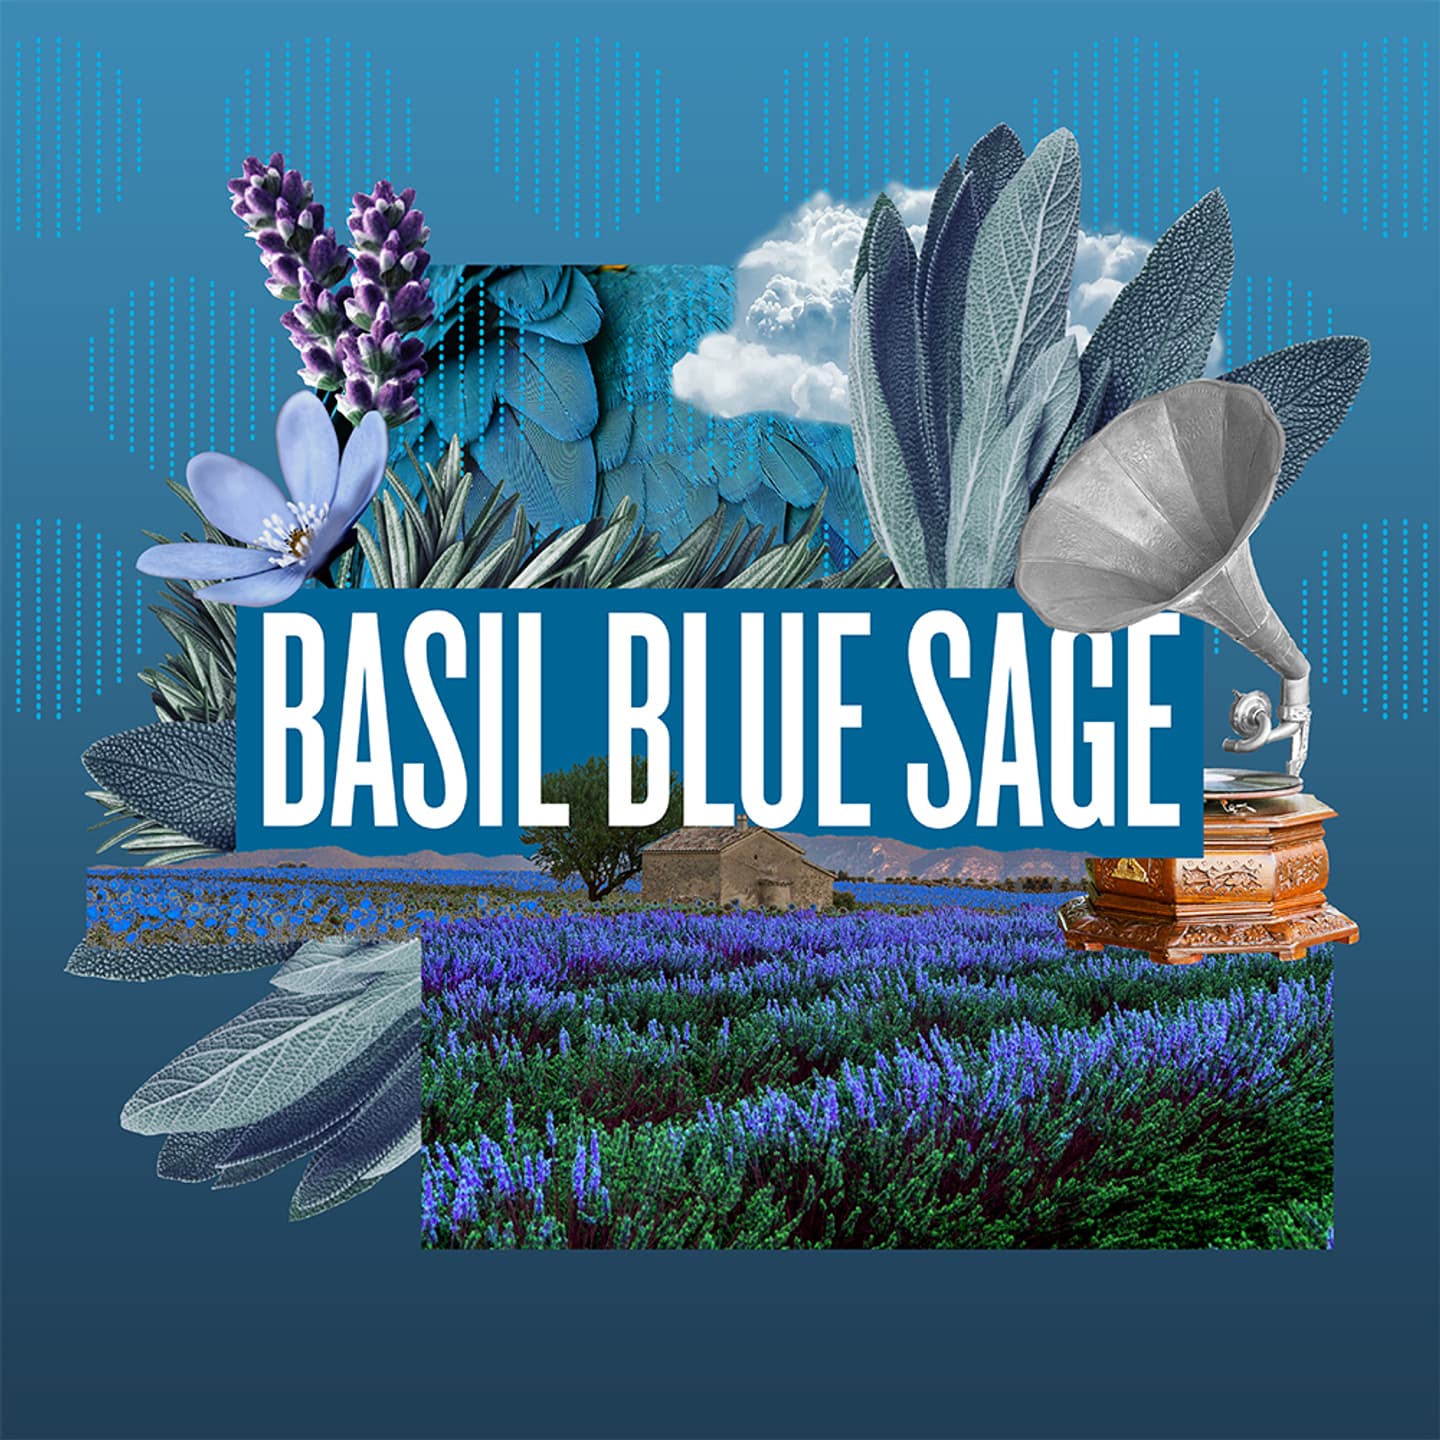 2 Basil Blue Sage copy